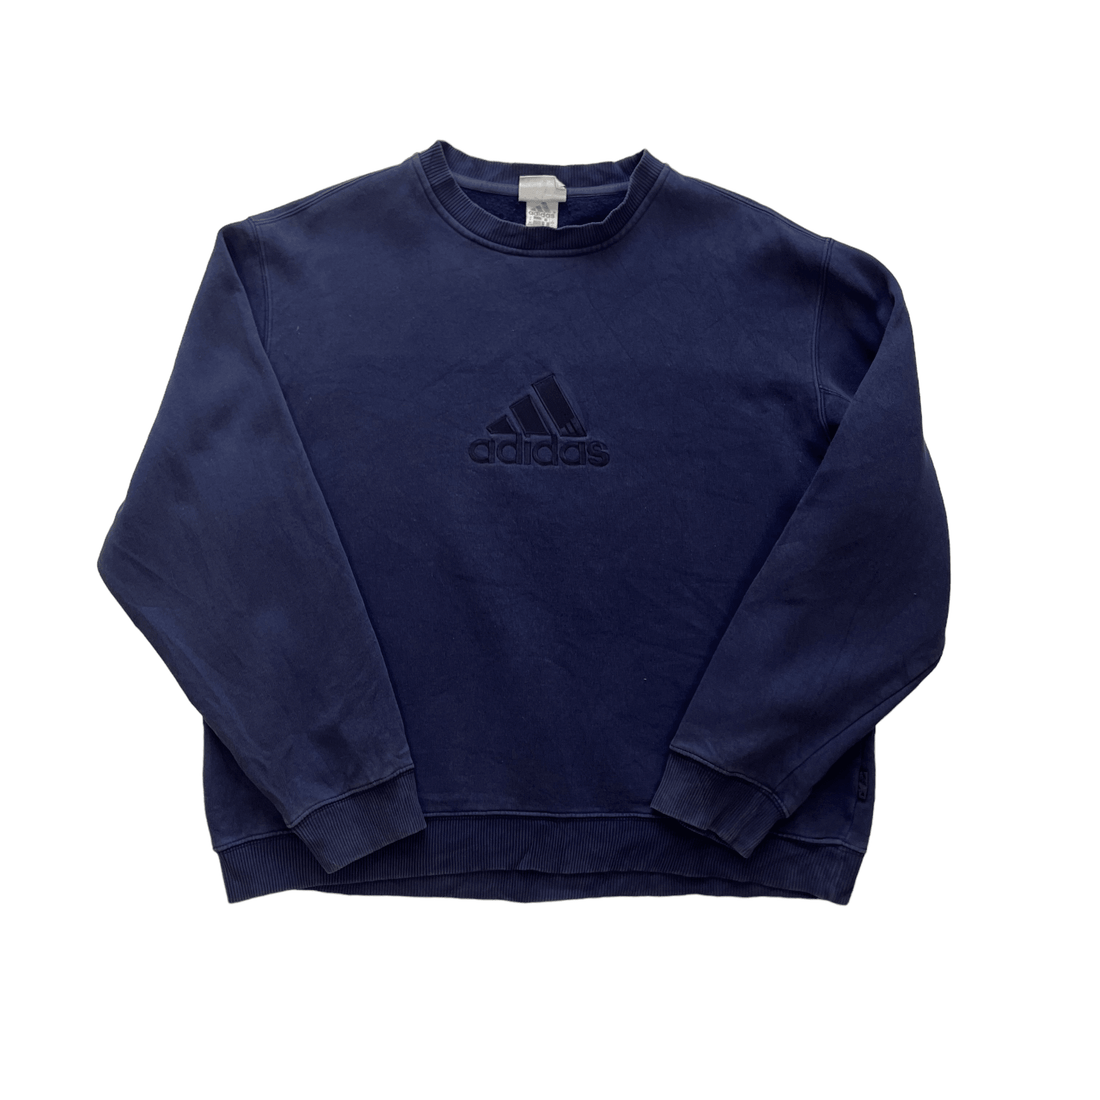 Vintage 90s Navy Blue Adidas Large Logo Sweatshirt - Extra Large - The Streetwear Studio